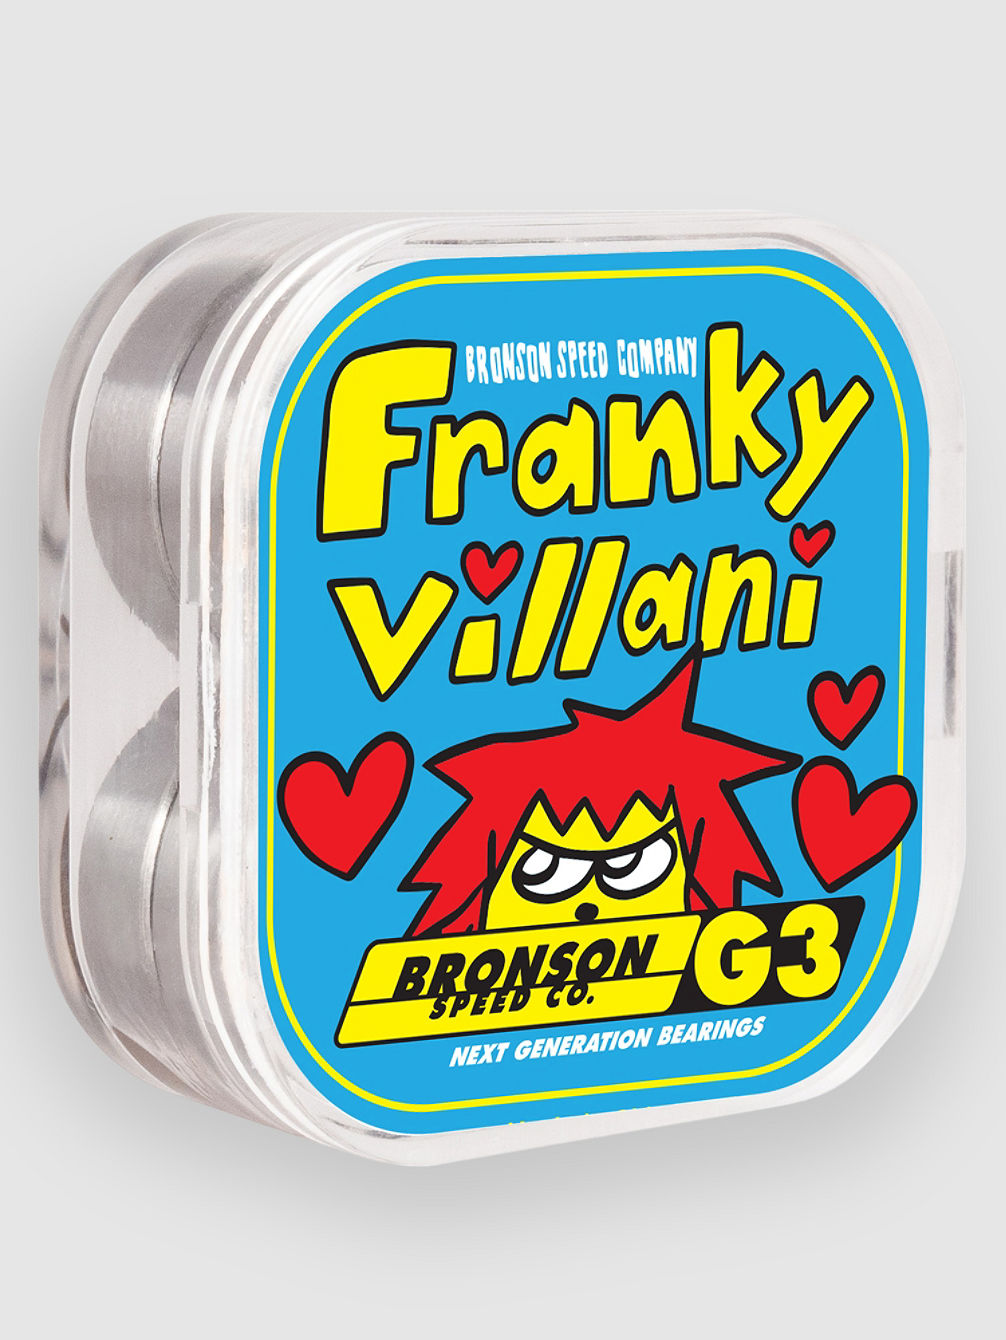 Franky Villani Pro G3 Lozyska